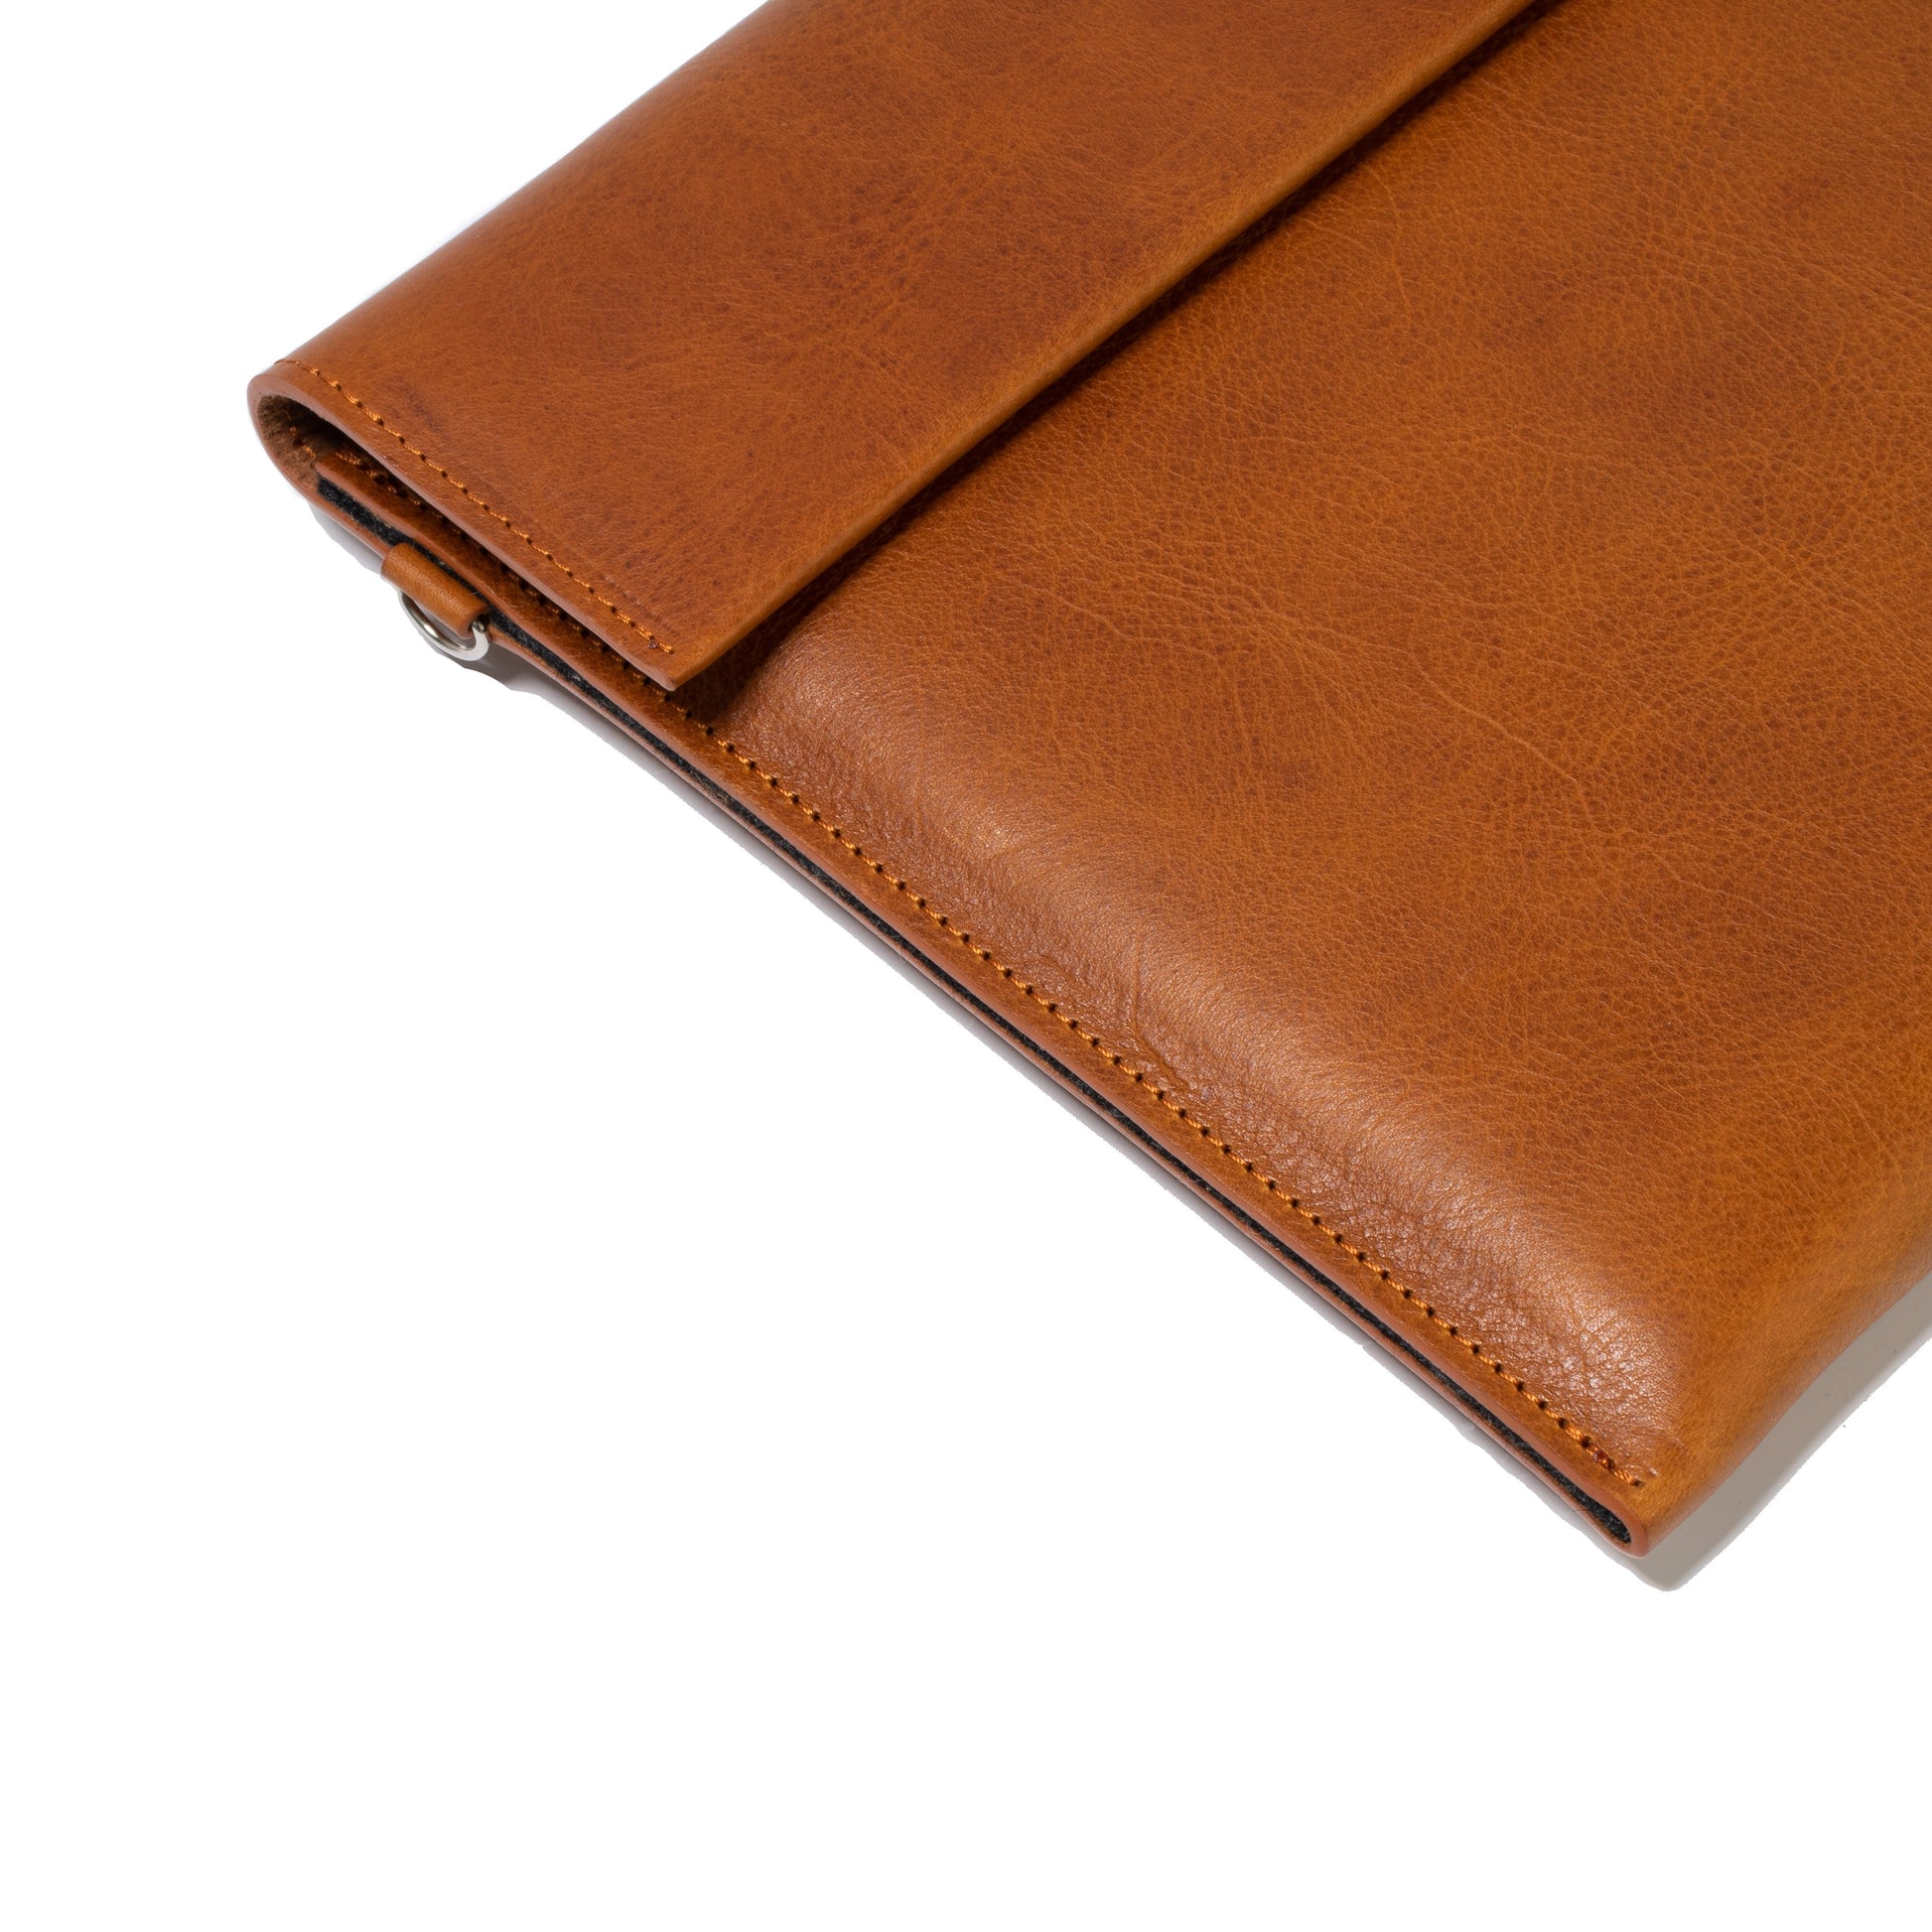 Leather Bag for iPad - The Minimalist 2.0-3